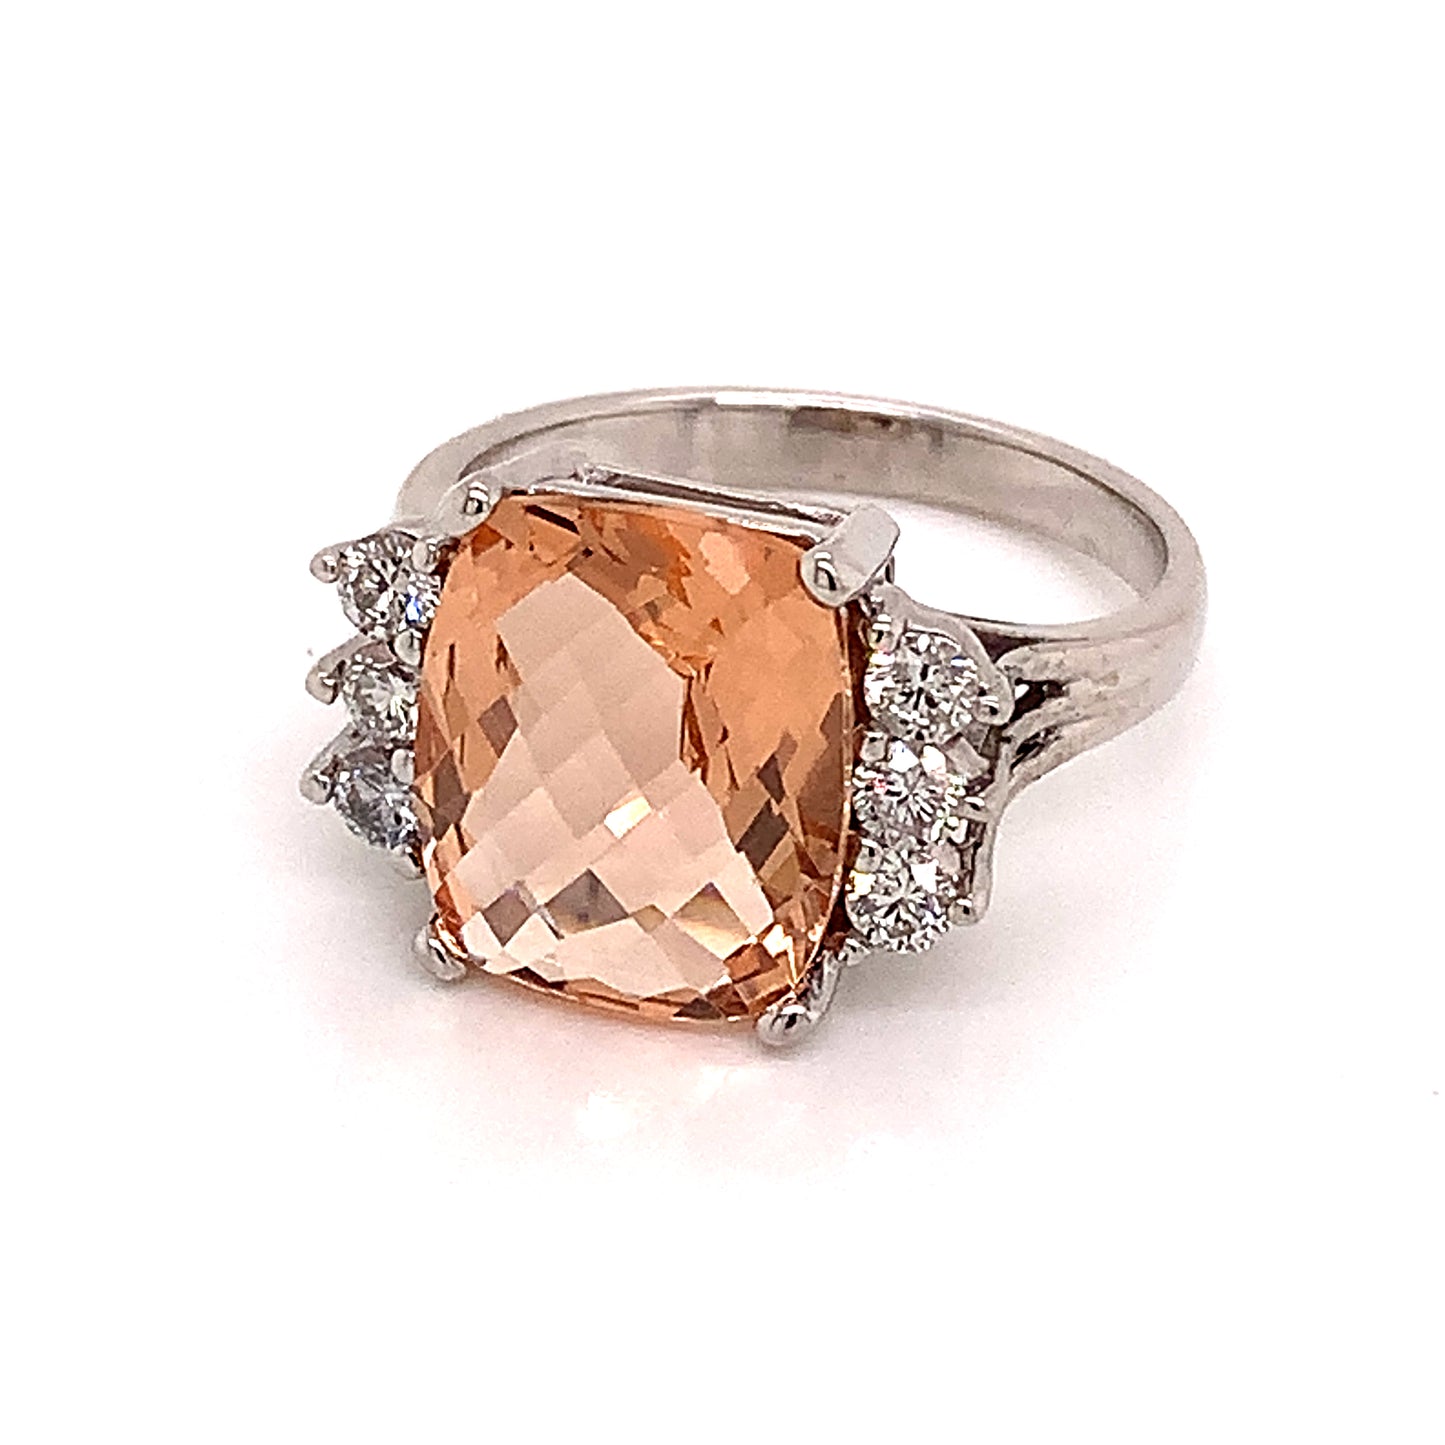 Diamond Morganite Ring Size 7.25 14k Gold 5.60 TCW Certified $5,950 120600 - Certified Fine Jewelry